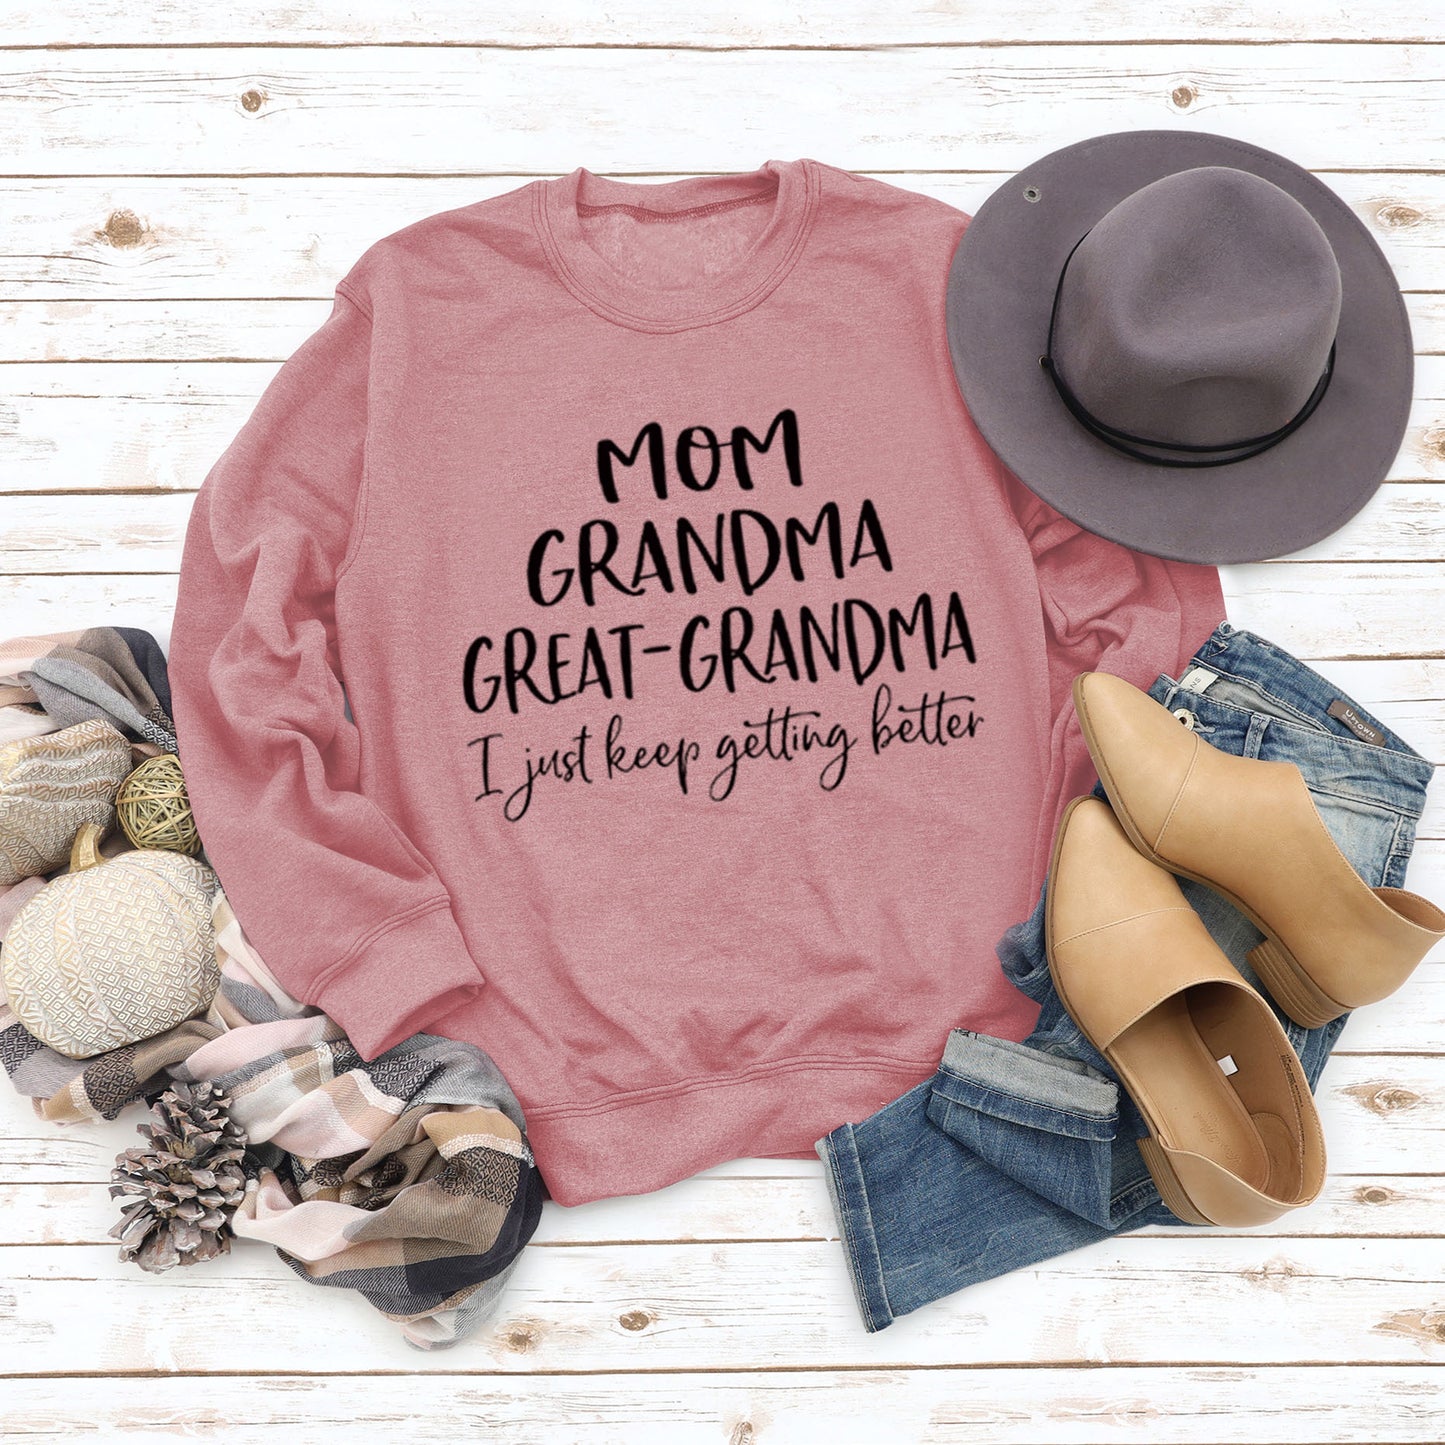 Great-Grandma Sweatshirt